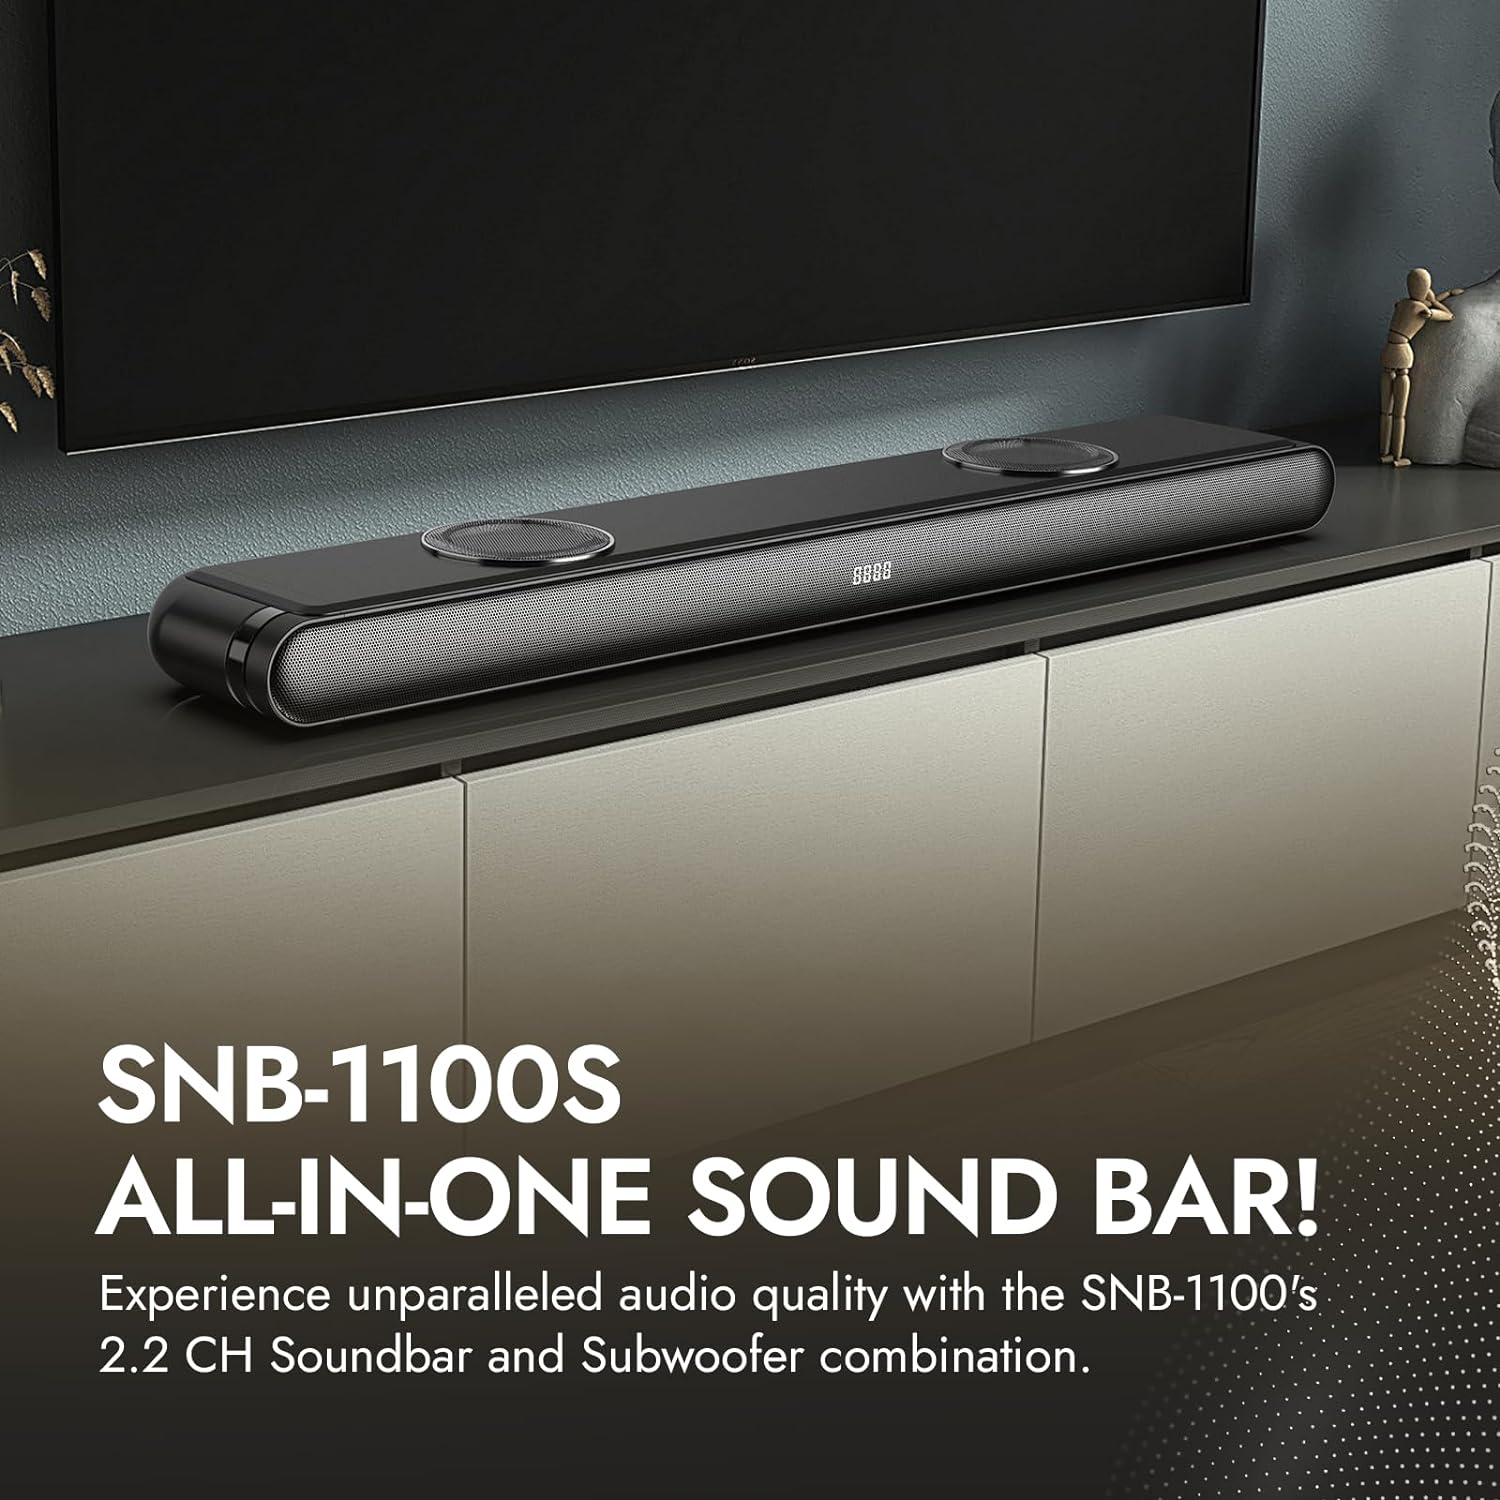 Dolphin Premium Sound Bar Speaker Review